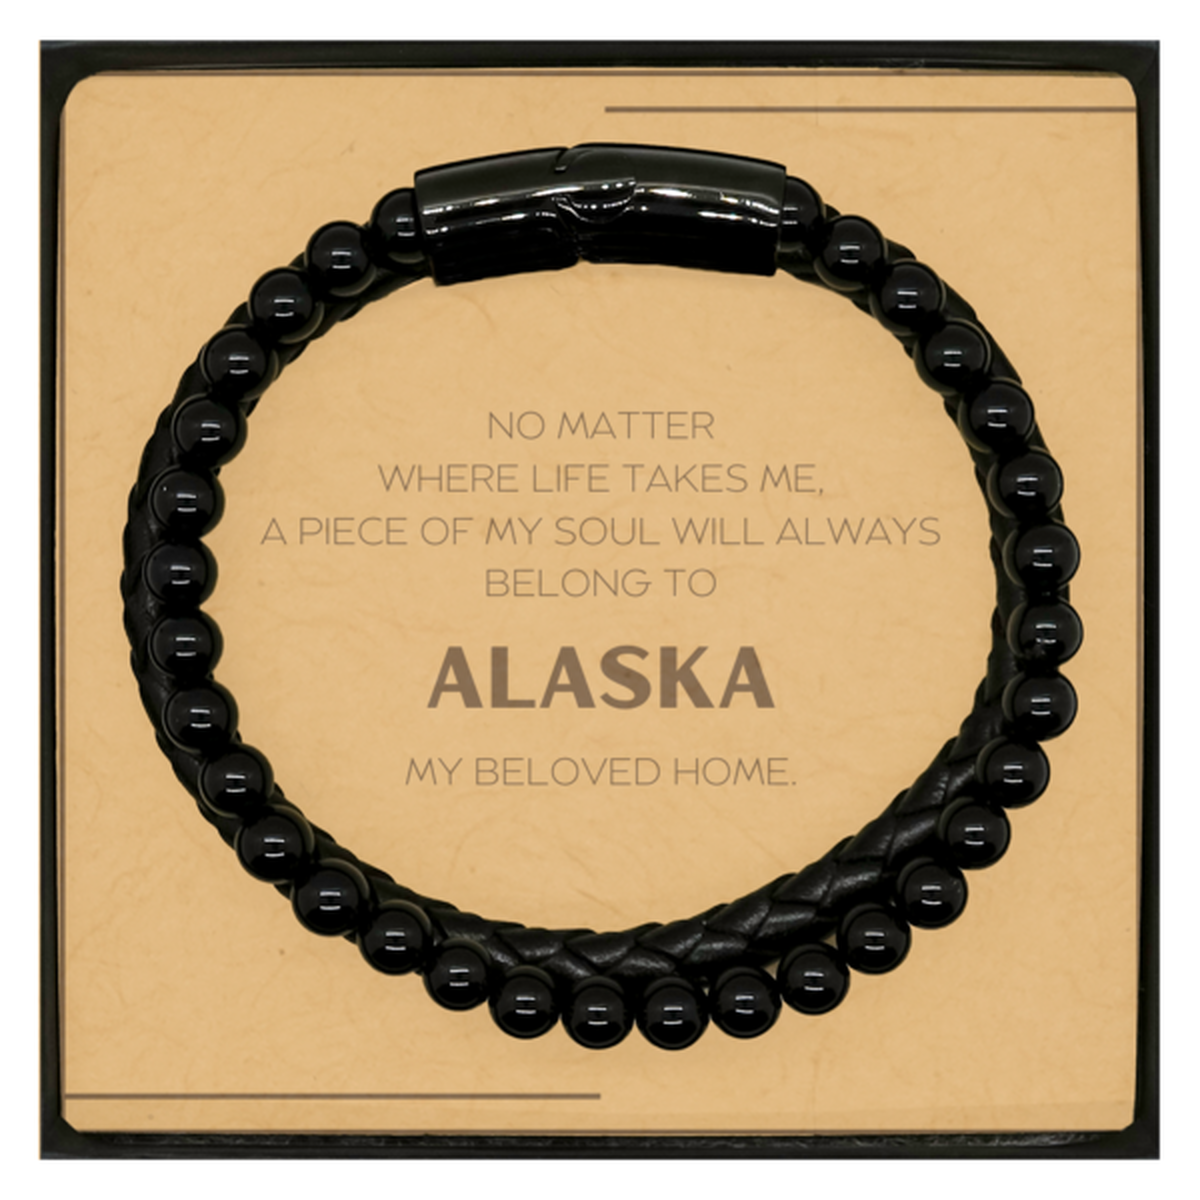 Love Alaska State Gifts, My soul will always belong to Alaska, Proud Stone Leather Bracelets, Birthday Christmas Unique Gifts For Alaska Men, Women, Friends